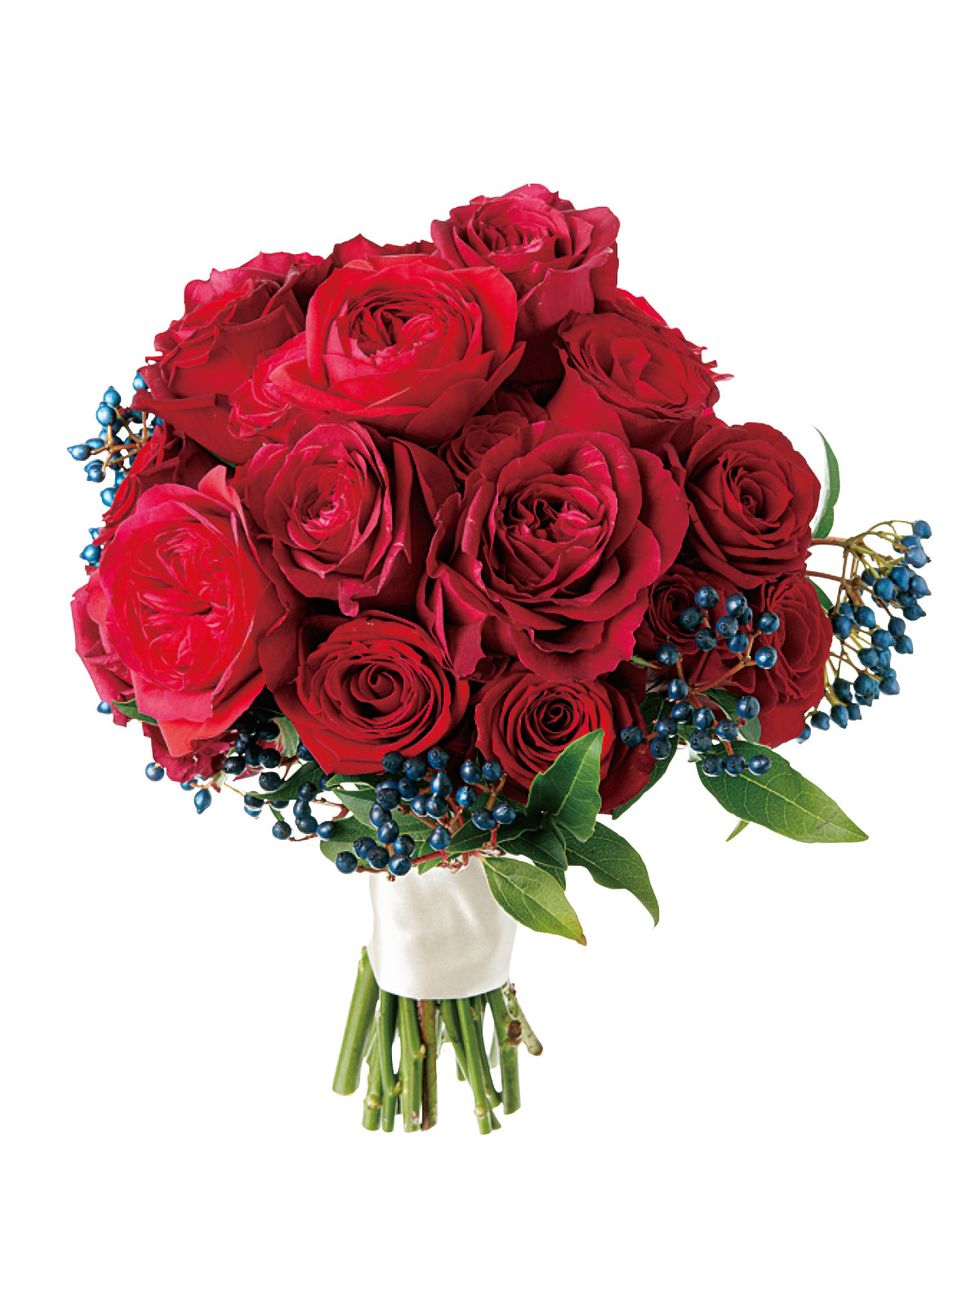 Flower, Bouquet, Flowering plant, Rose, Cut flowers, Garden roses, Plant, Red, Rose family, Floribunda, 